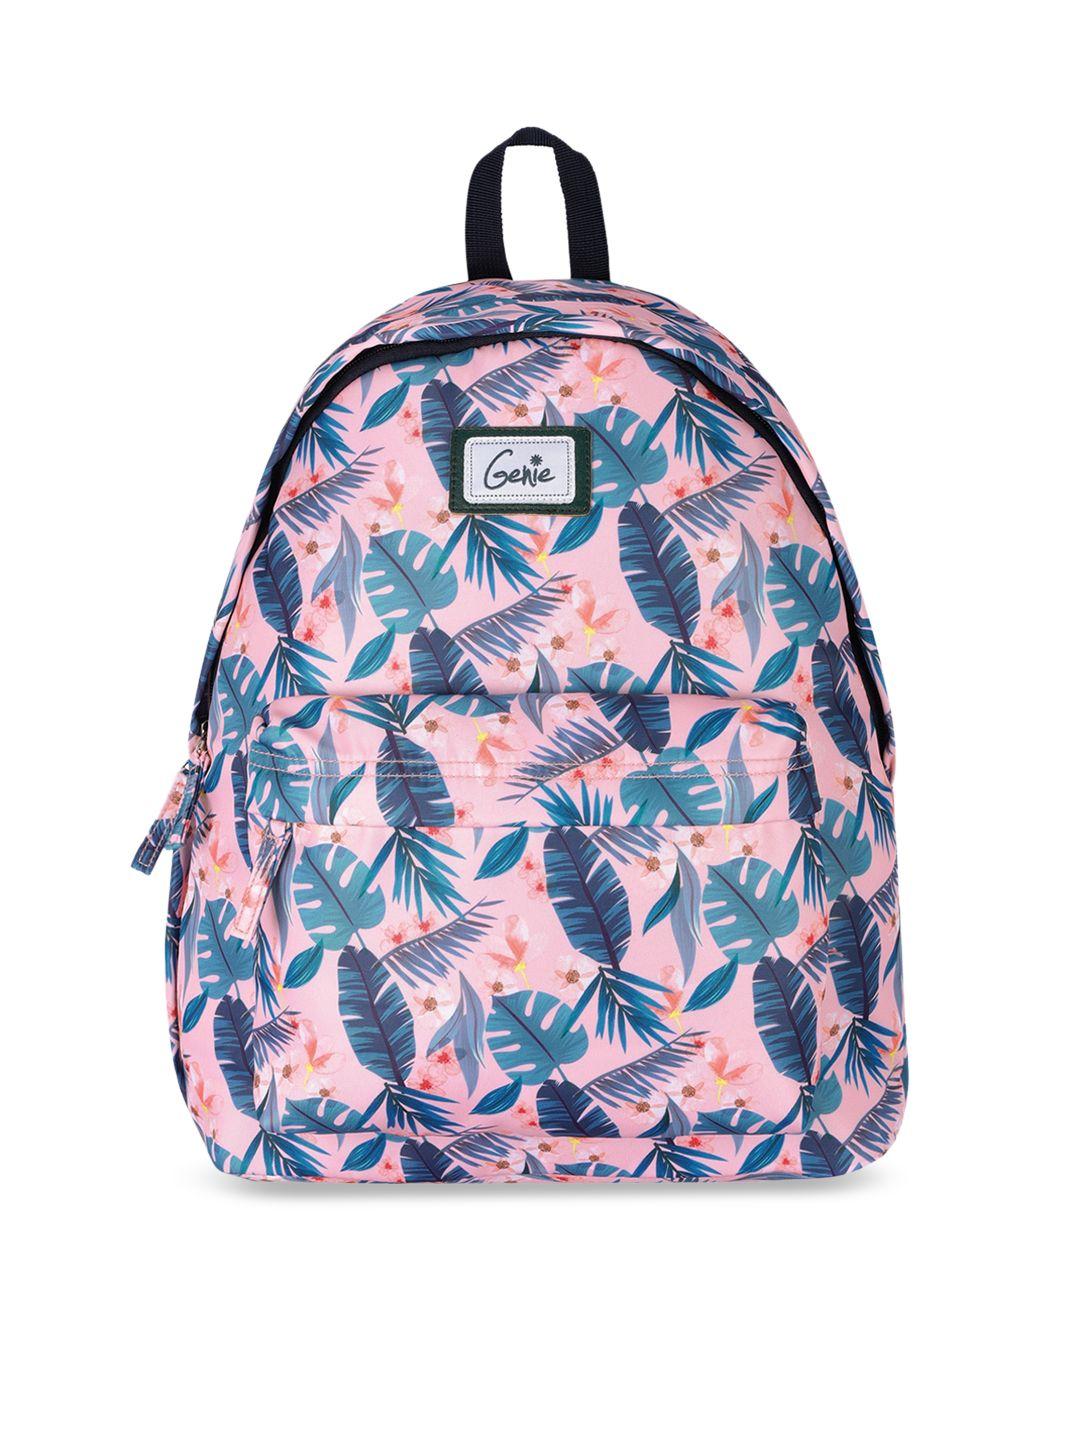 genie unisex pink & blue tropical print 16 inches medium backpack